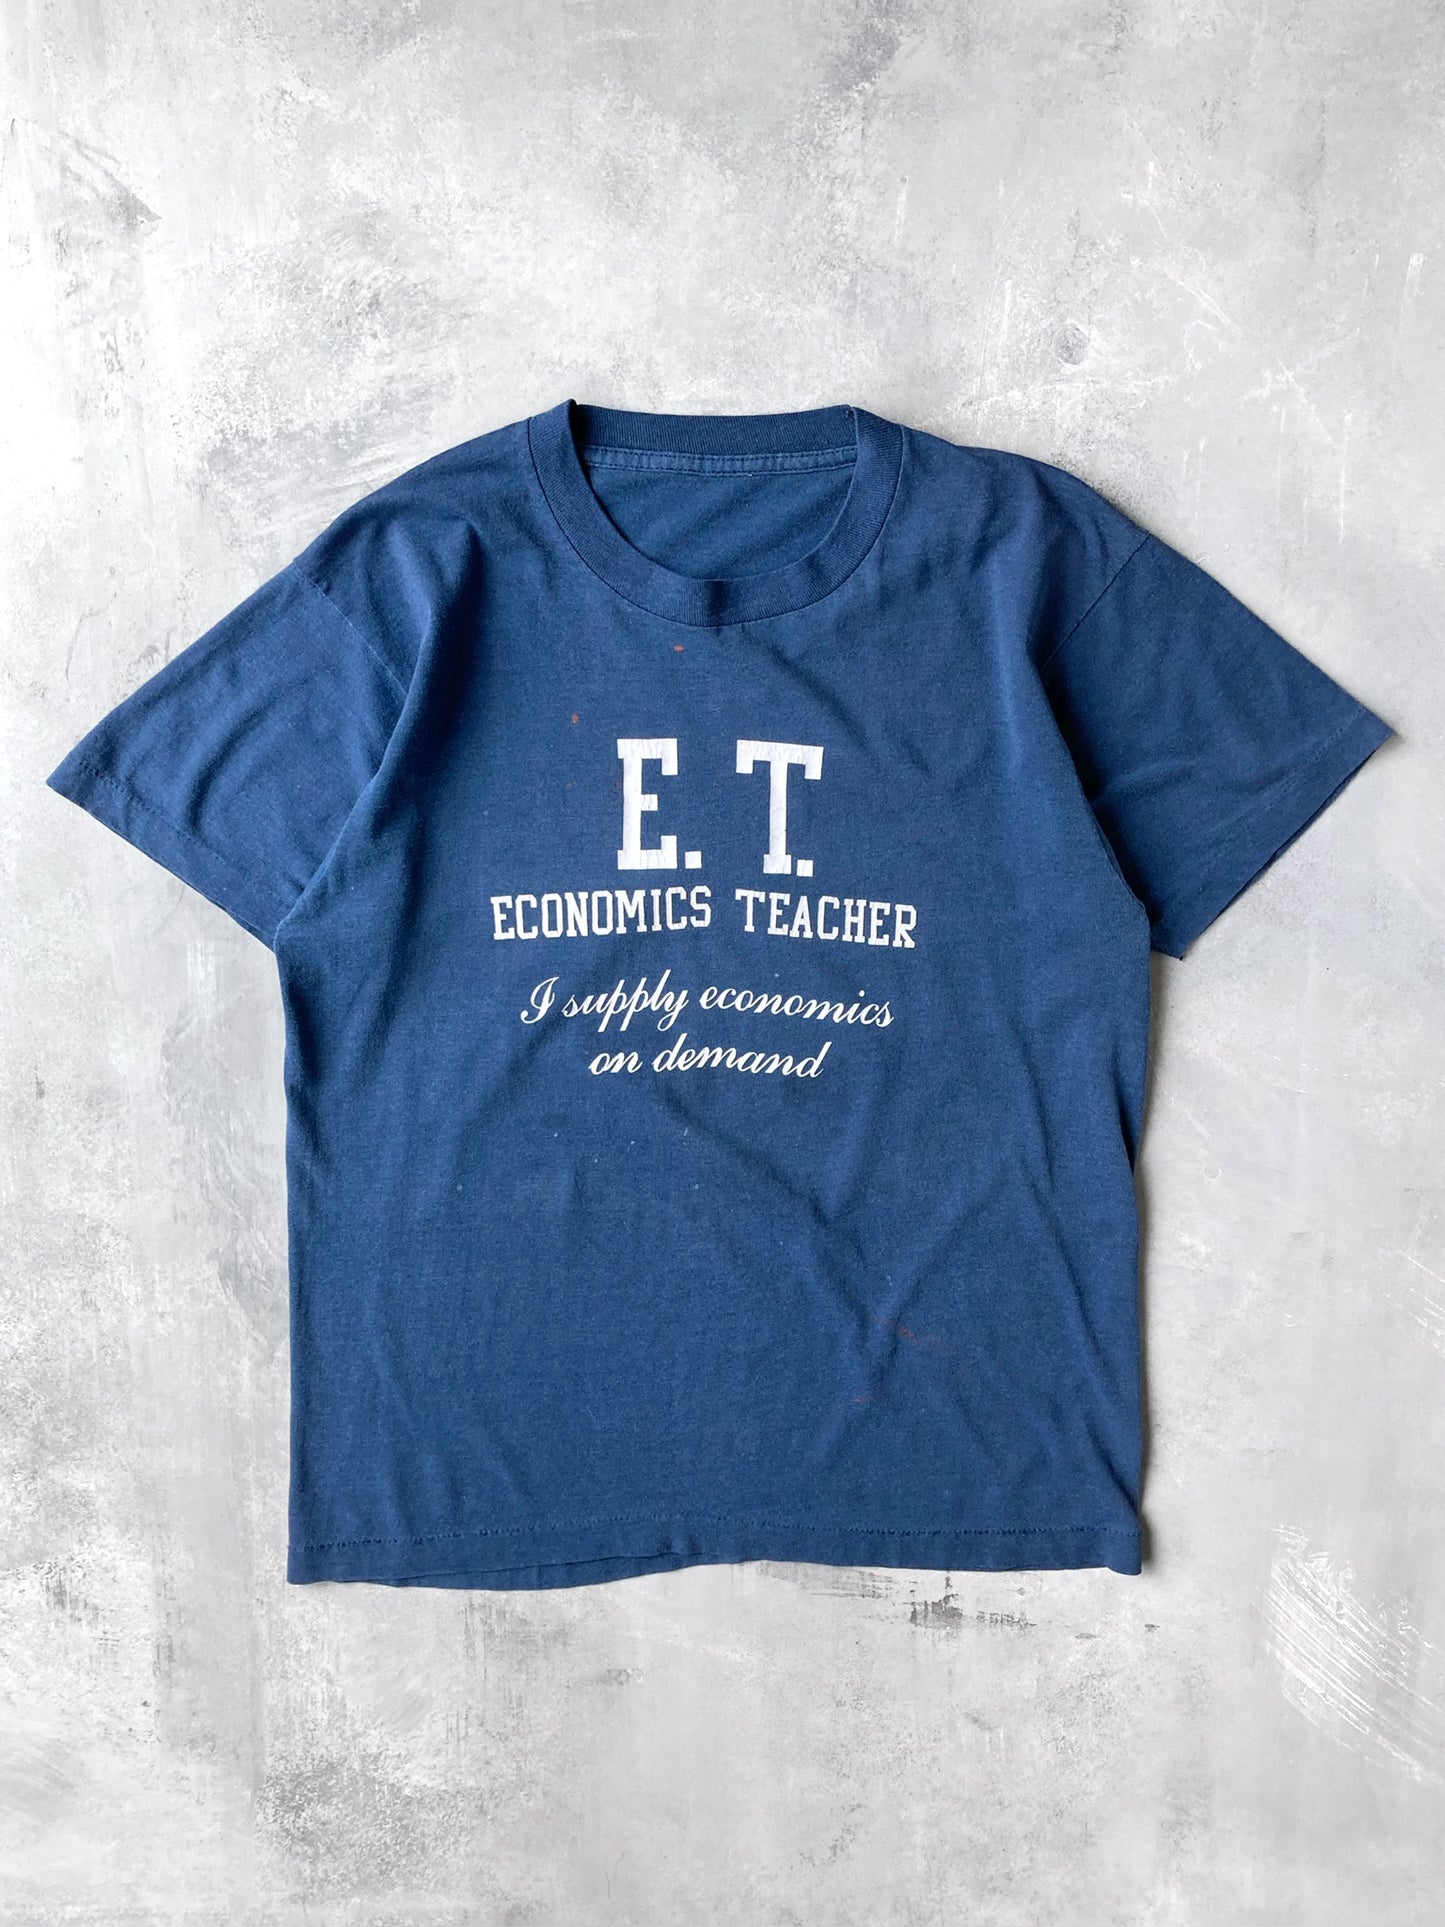 Rochester Economics T-Shirt 80's - Medium